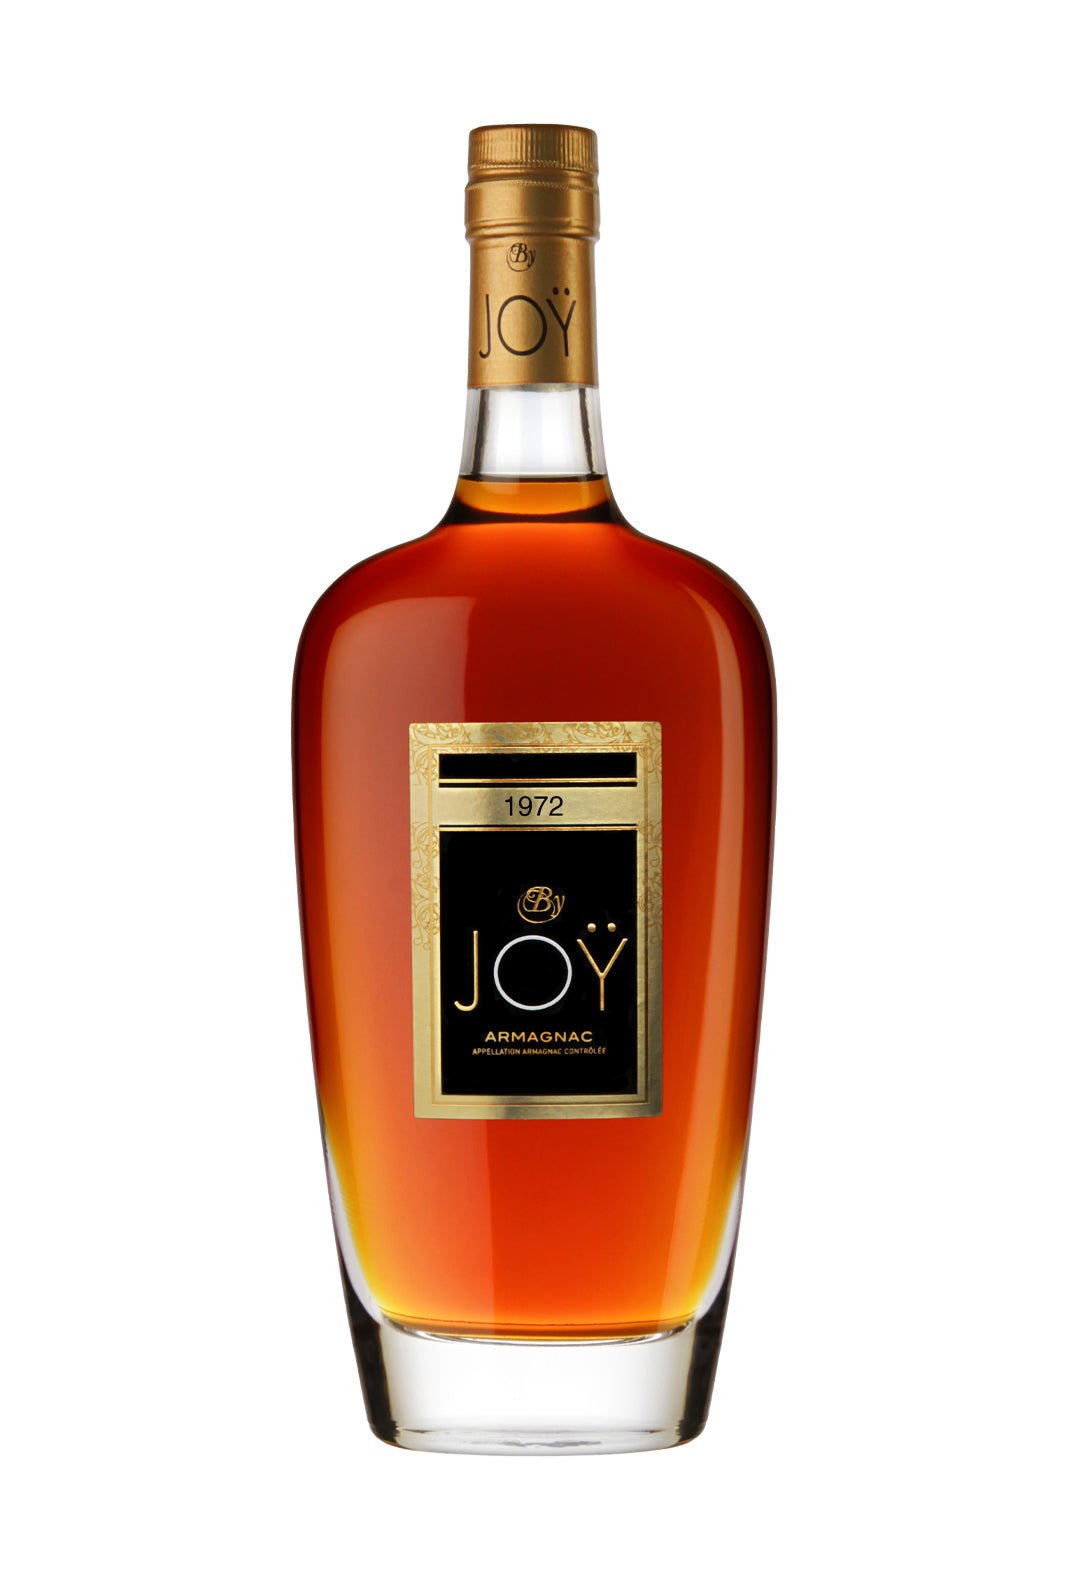 Domaine de Joy 1972 Armagnac 40.5% 700ml | Brandy | Shop online at Spirits of France